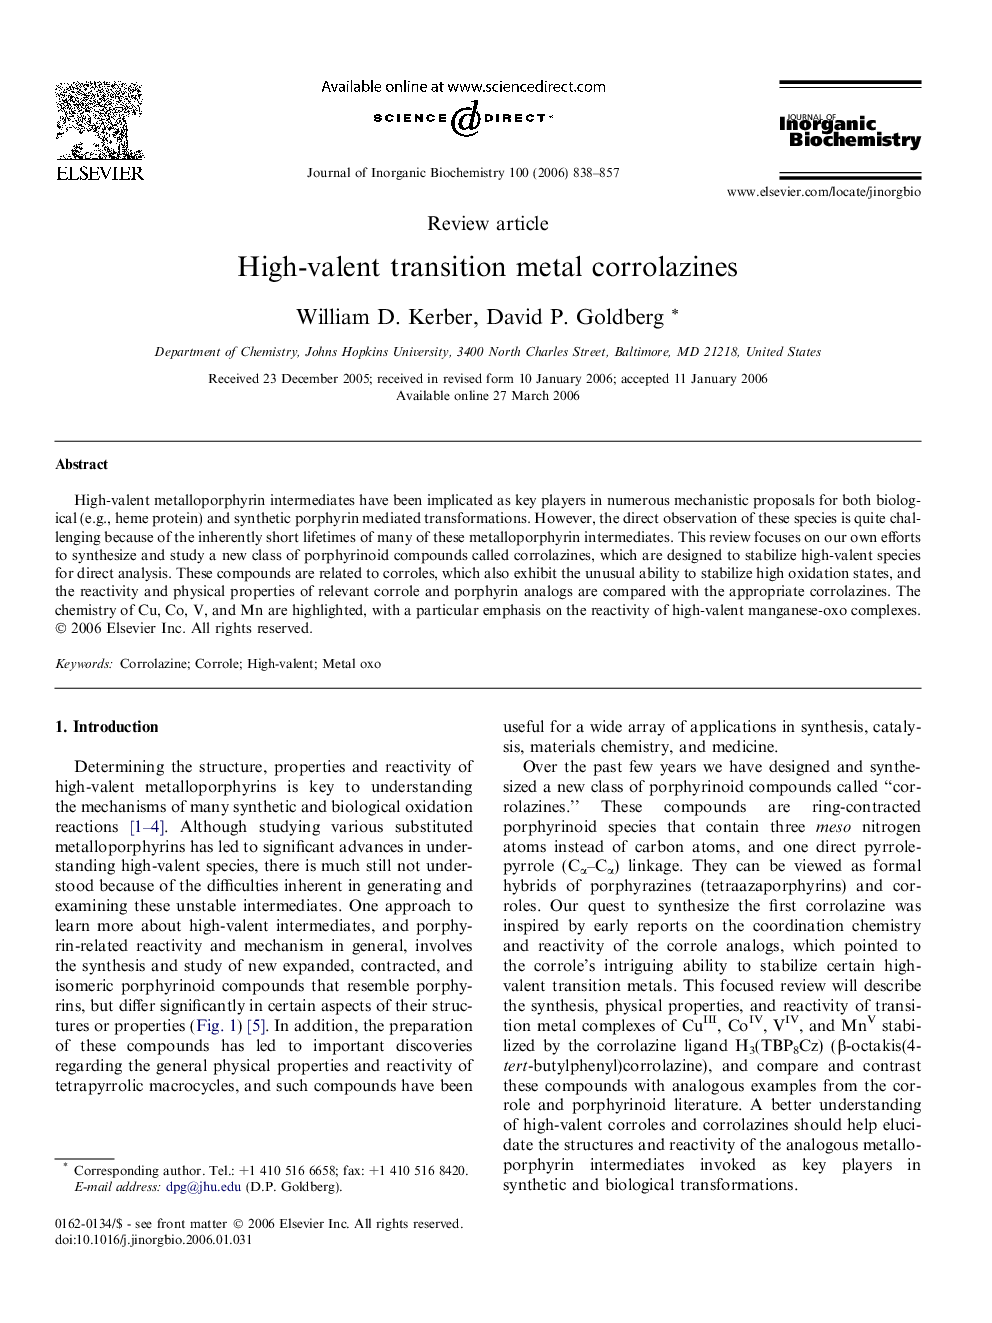 High-valent transition metal corrolazines